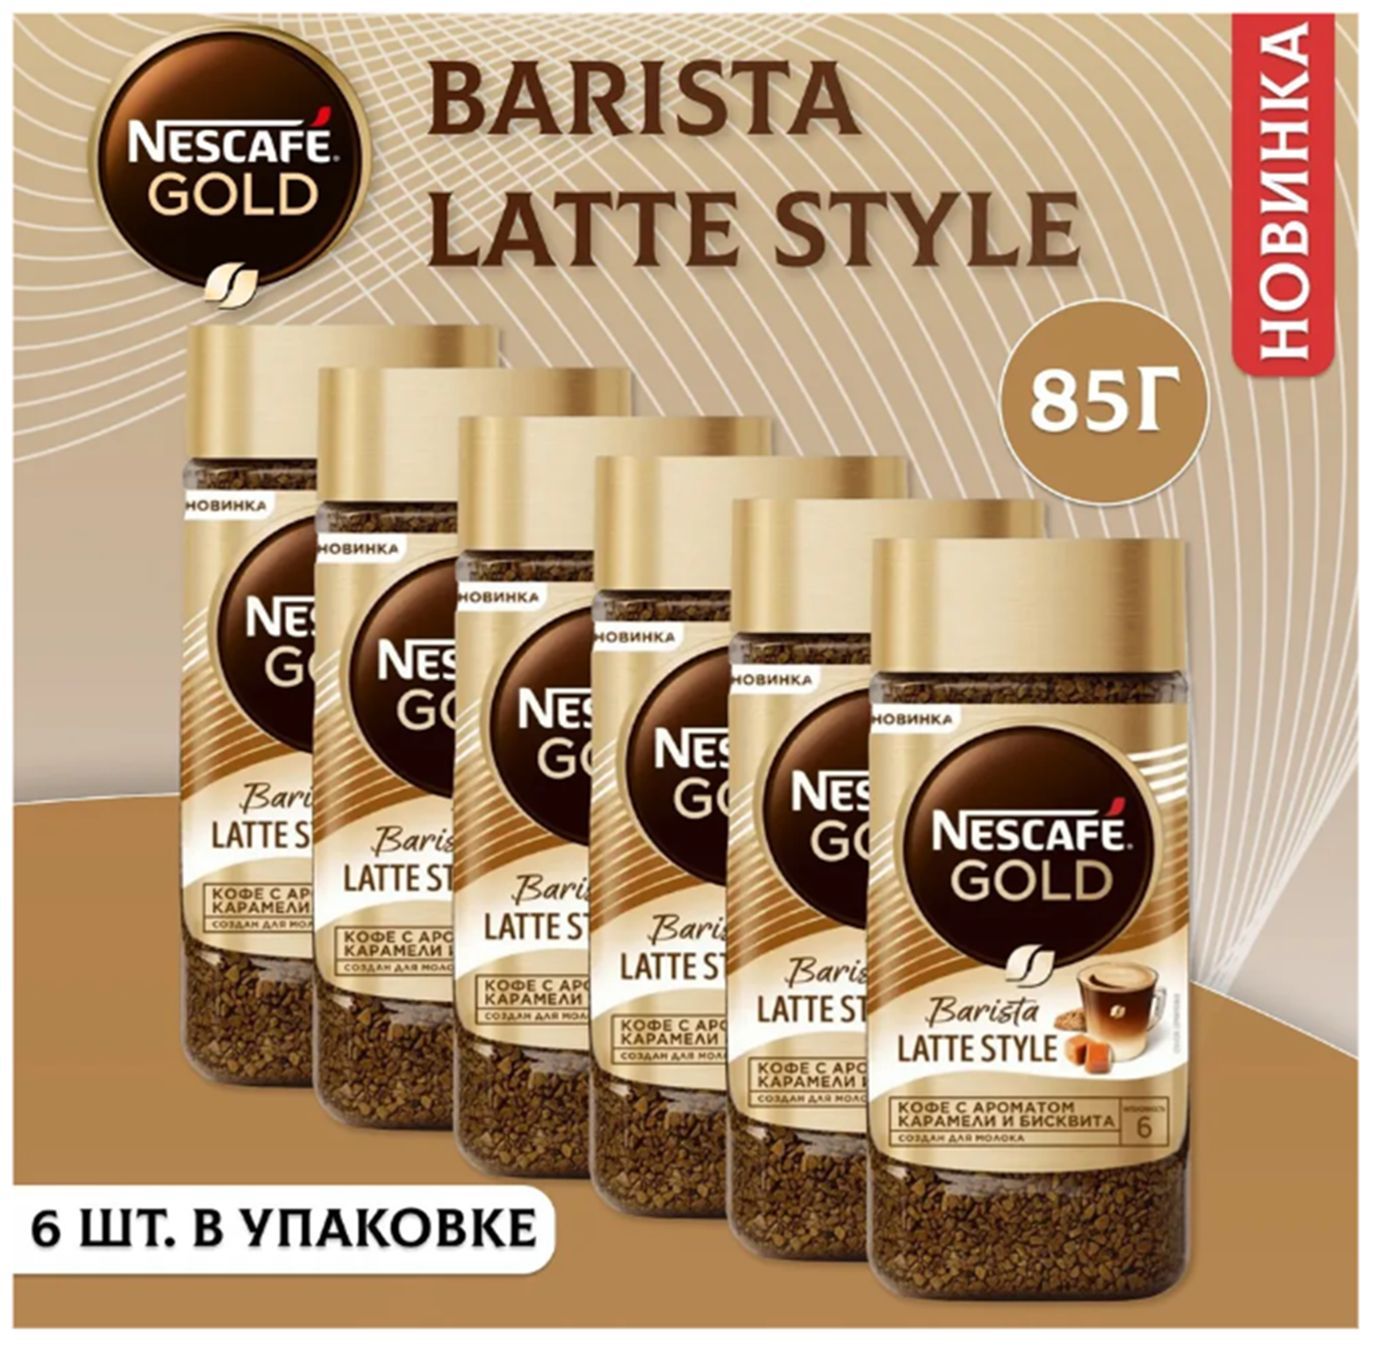 Nescafe gold barista style. Нескафе бариста латте. Nescafe Barista Latte Style. Молоко латте бариста. Кофе Edition Gold.